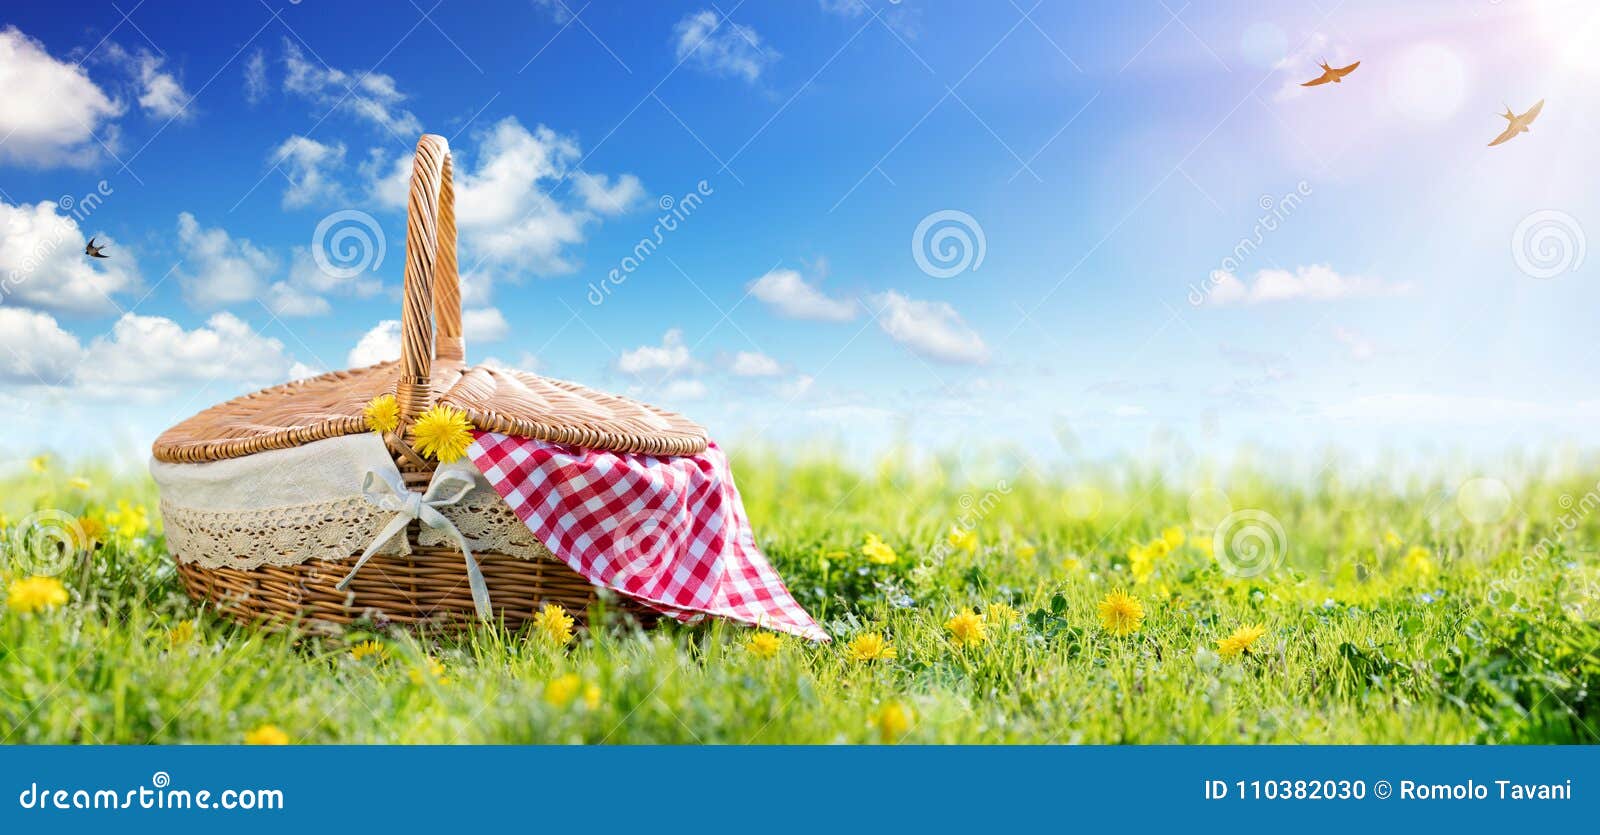 picnic - basket on meadow